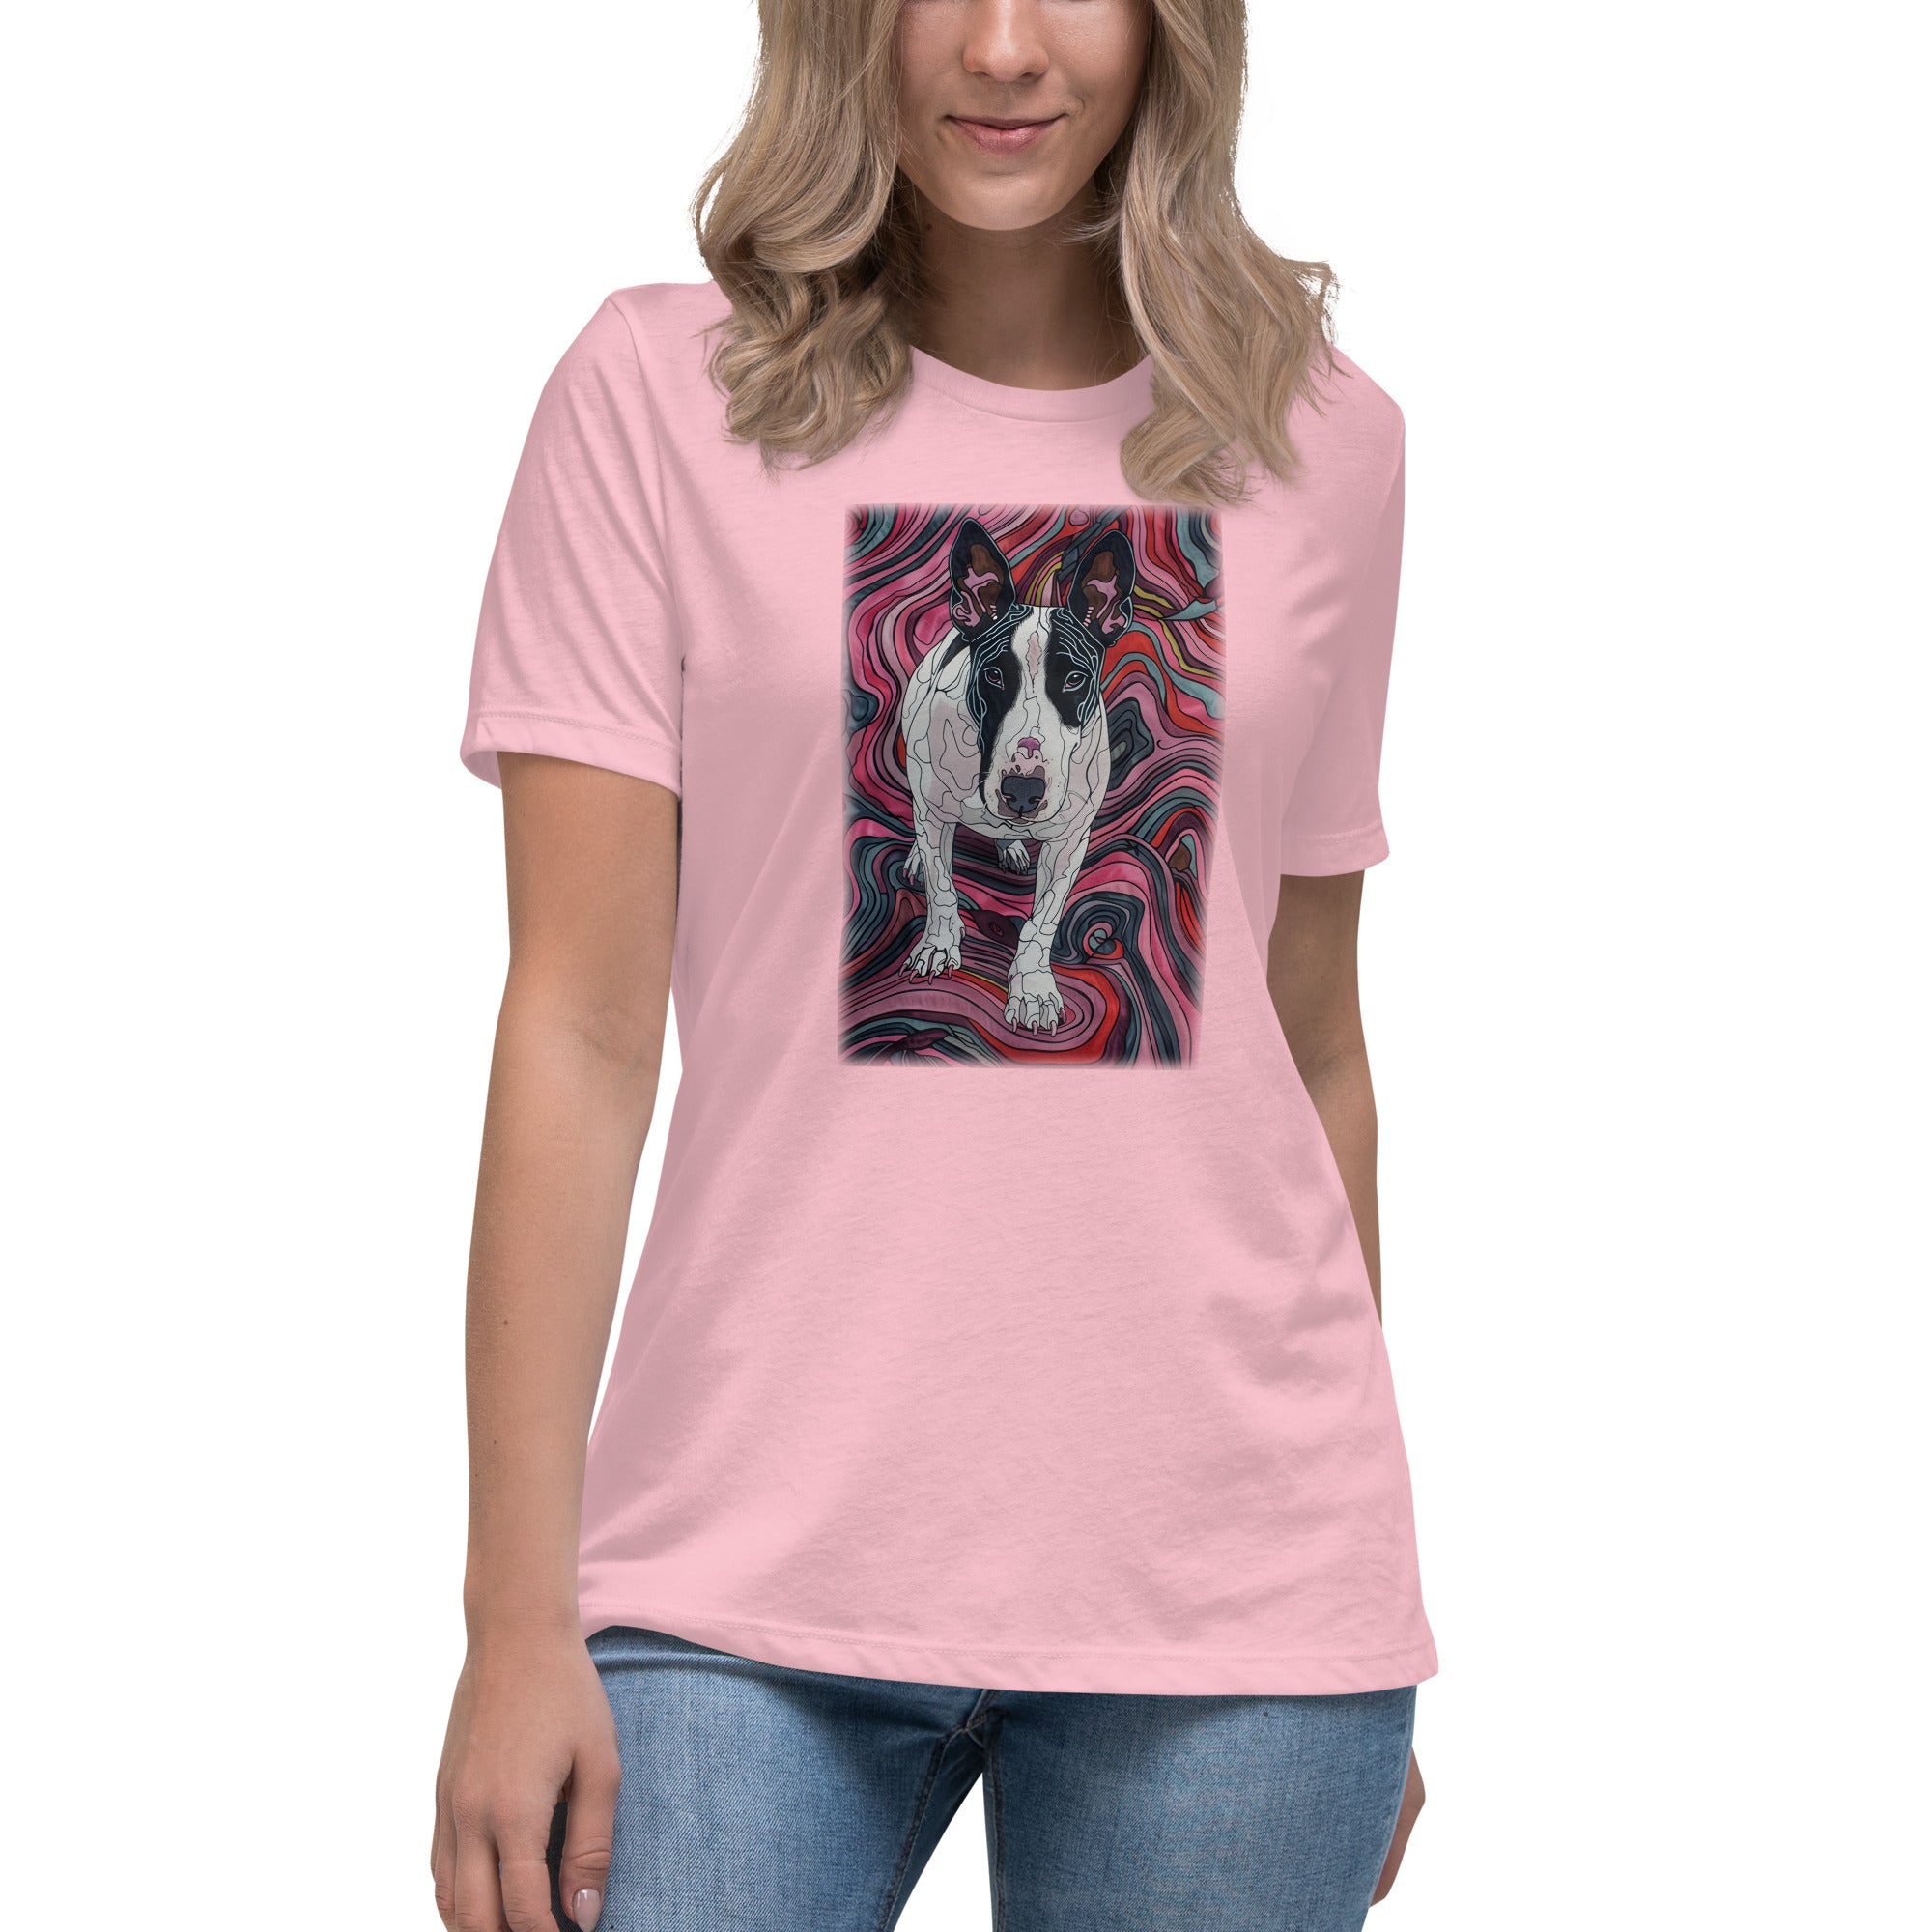 English Bull Terrier Women's Relaxed T-Shirt